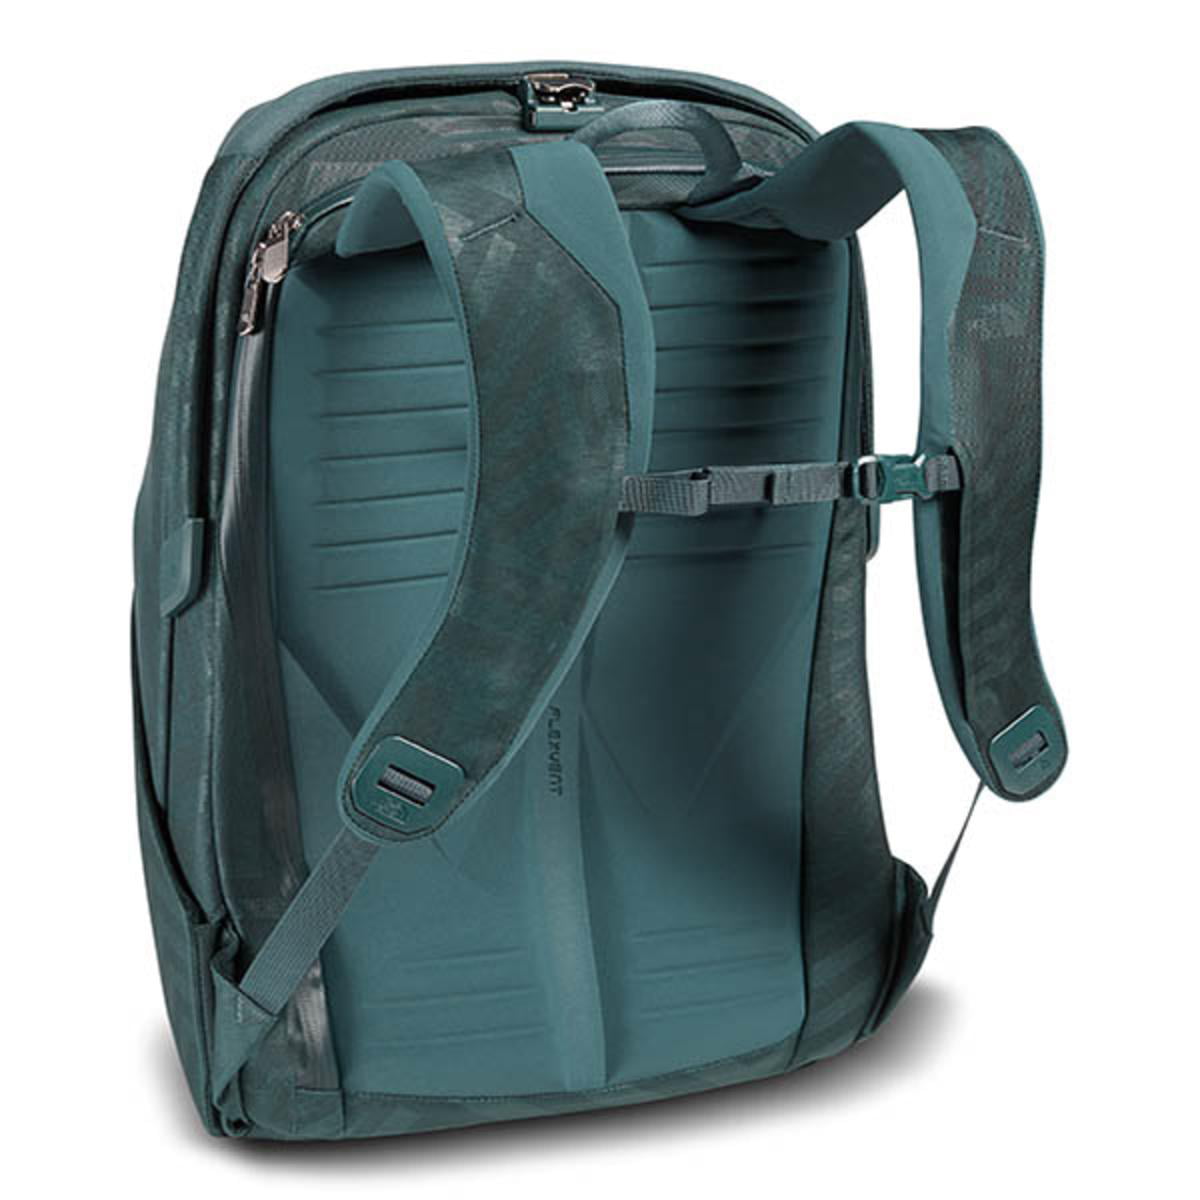 North Face 22L Backpack Bag One - Walmart.com